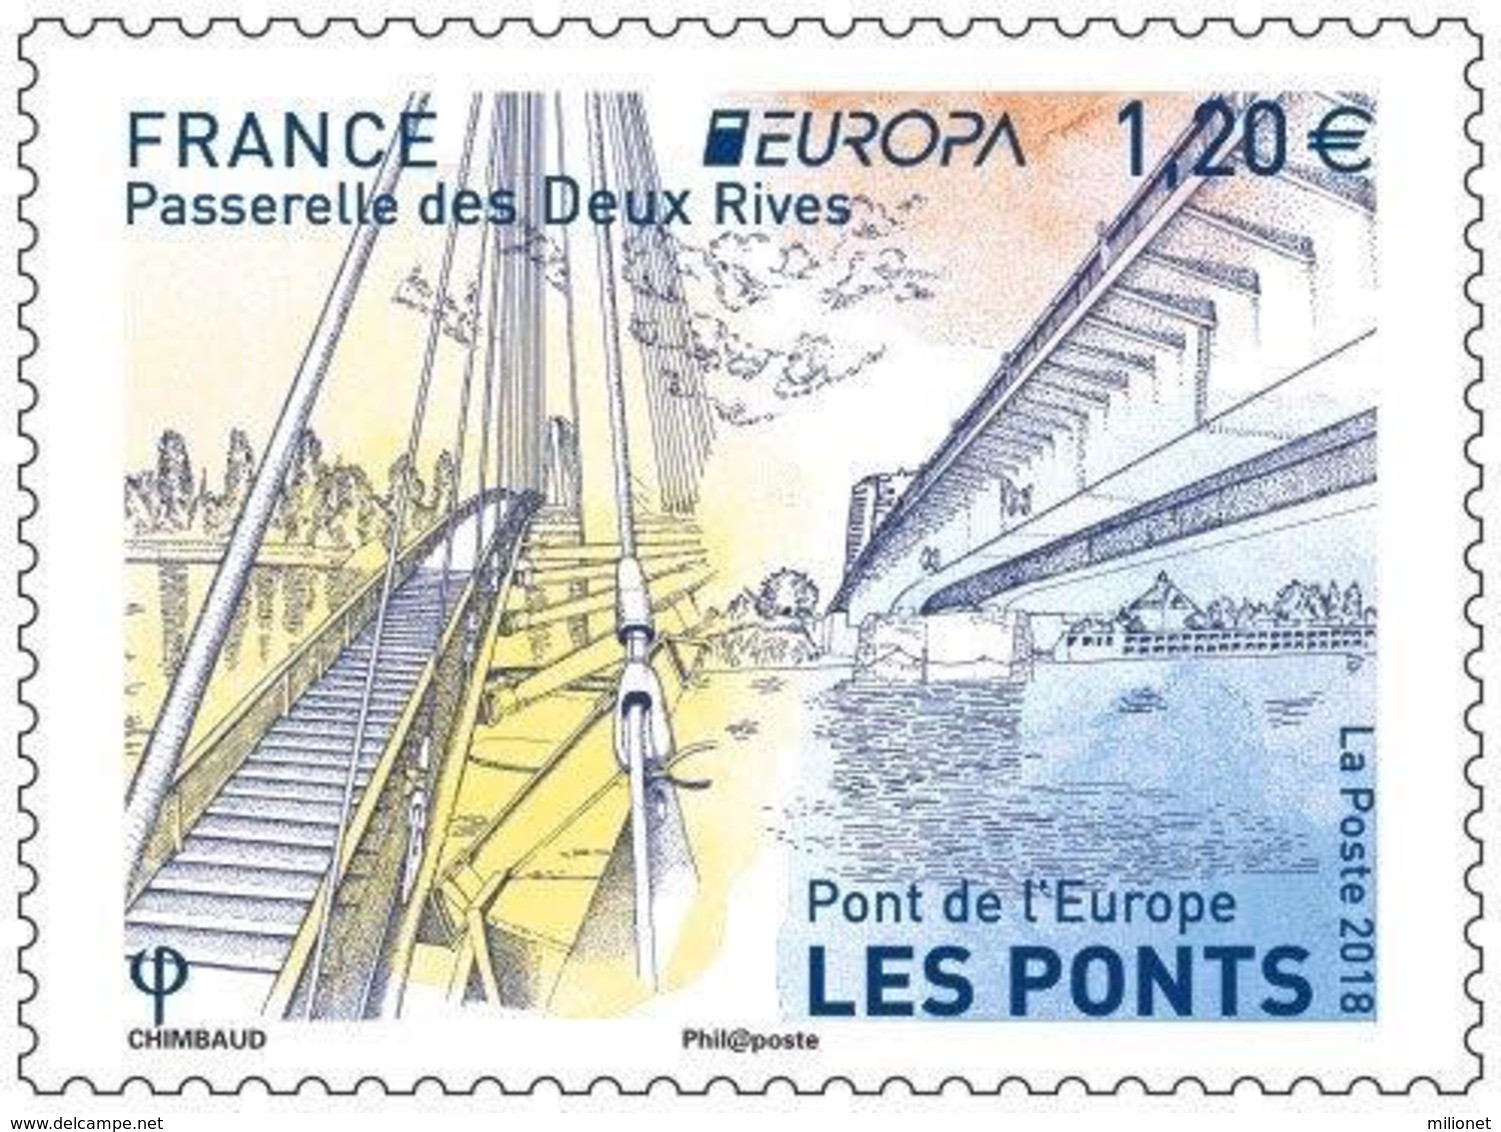 SALE!!! FRANCE FRANCIA FRANKREICH 2018 EUROPA BRIDGES Stamp MNH ** - 2018